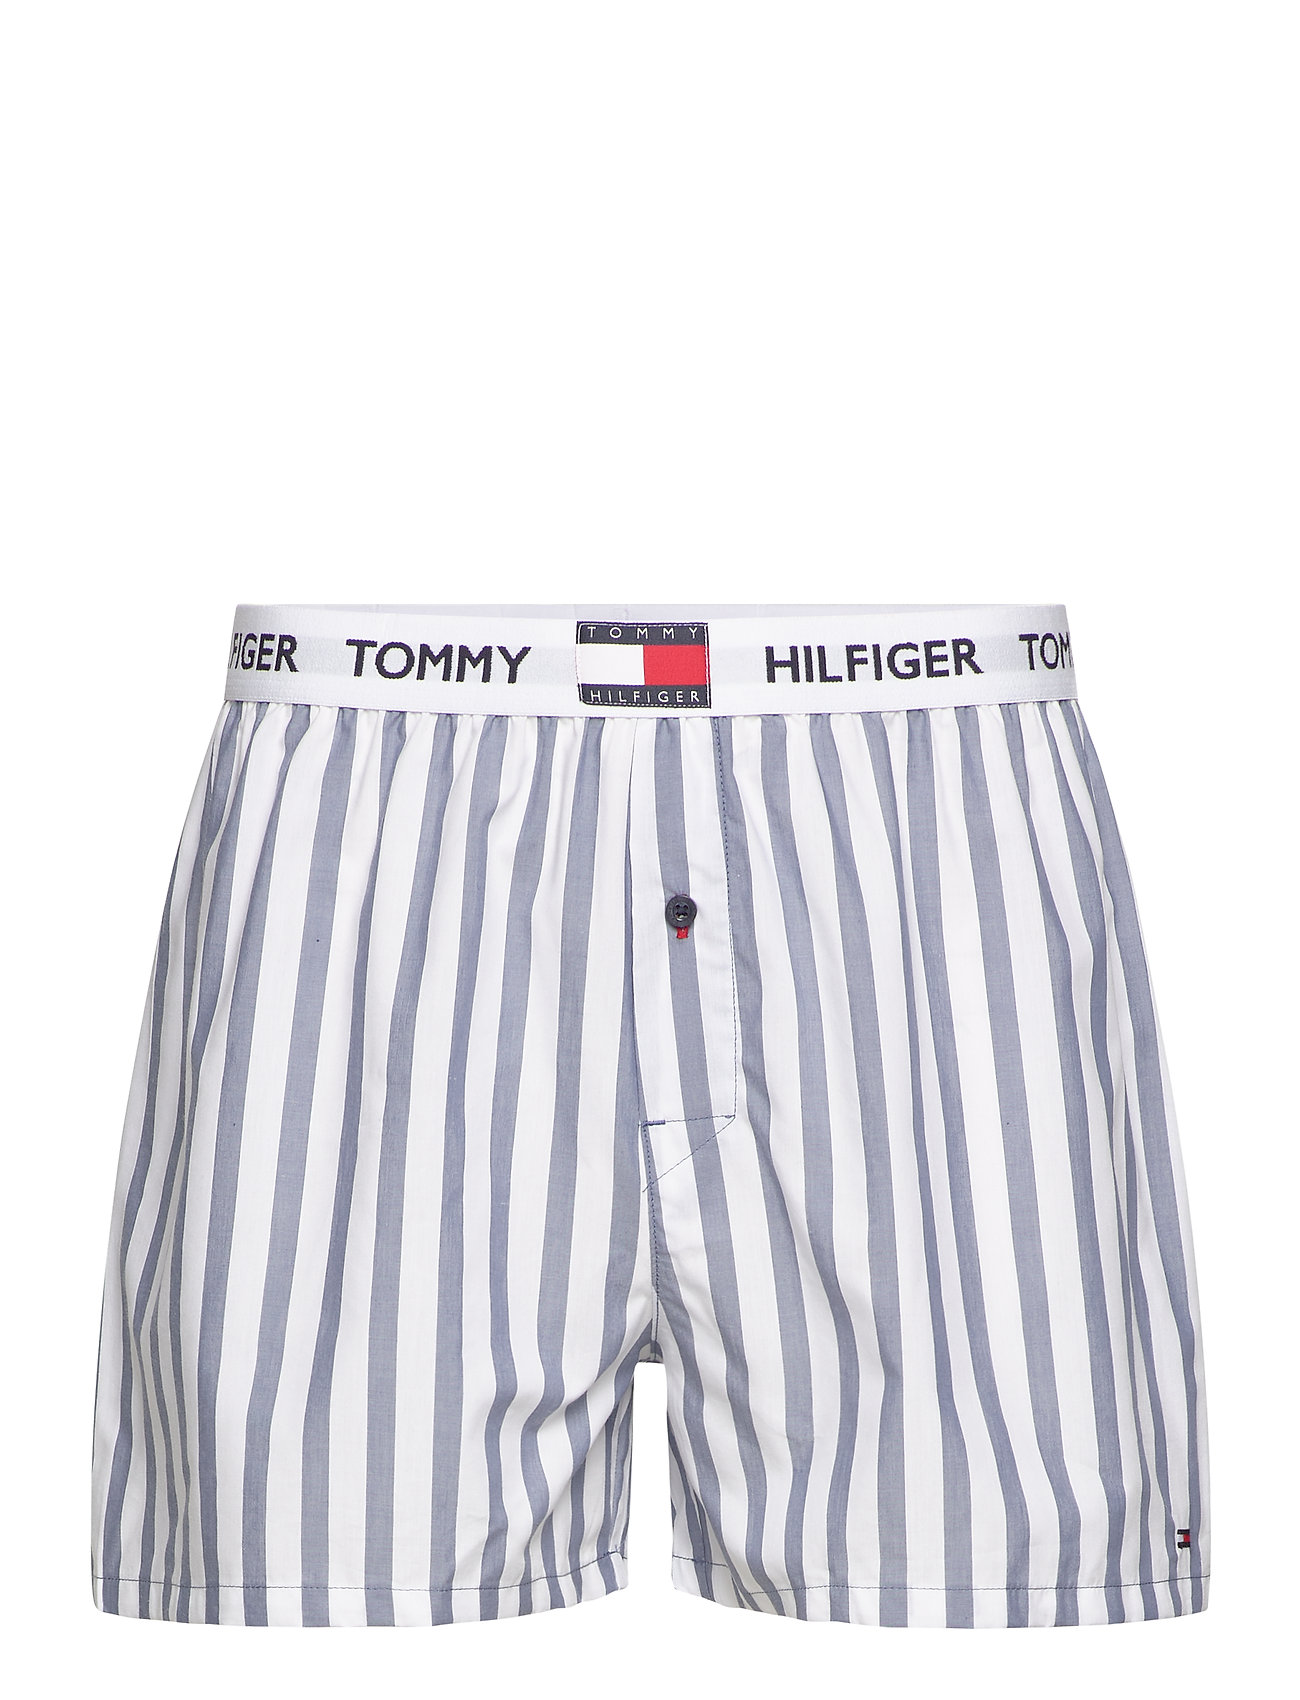 Twin stripe poplin boxer brief, Tommy Hilfiger